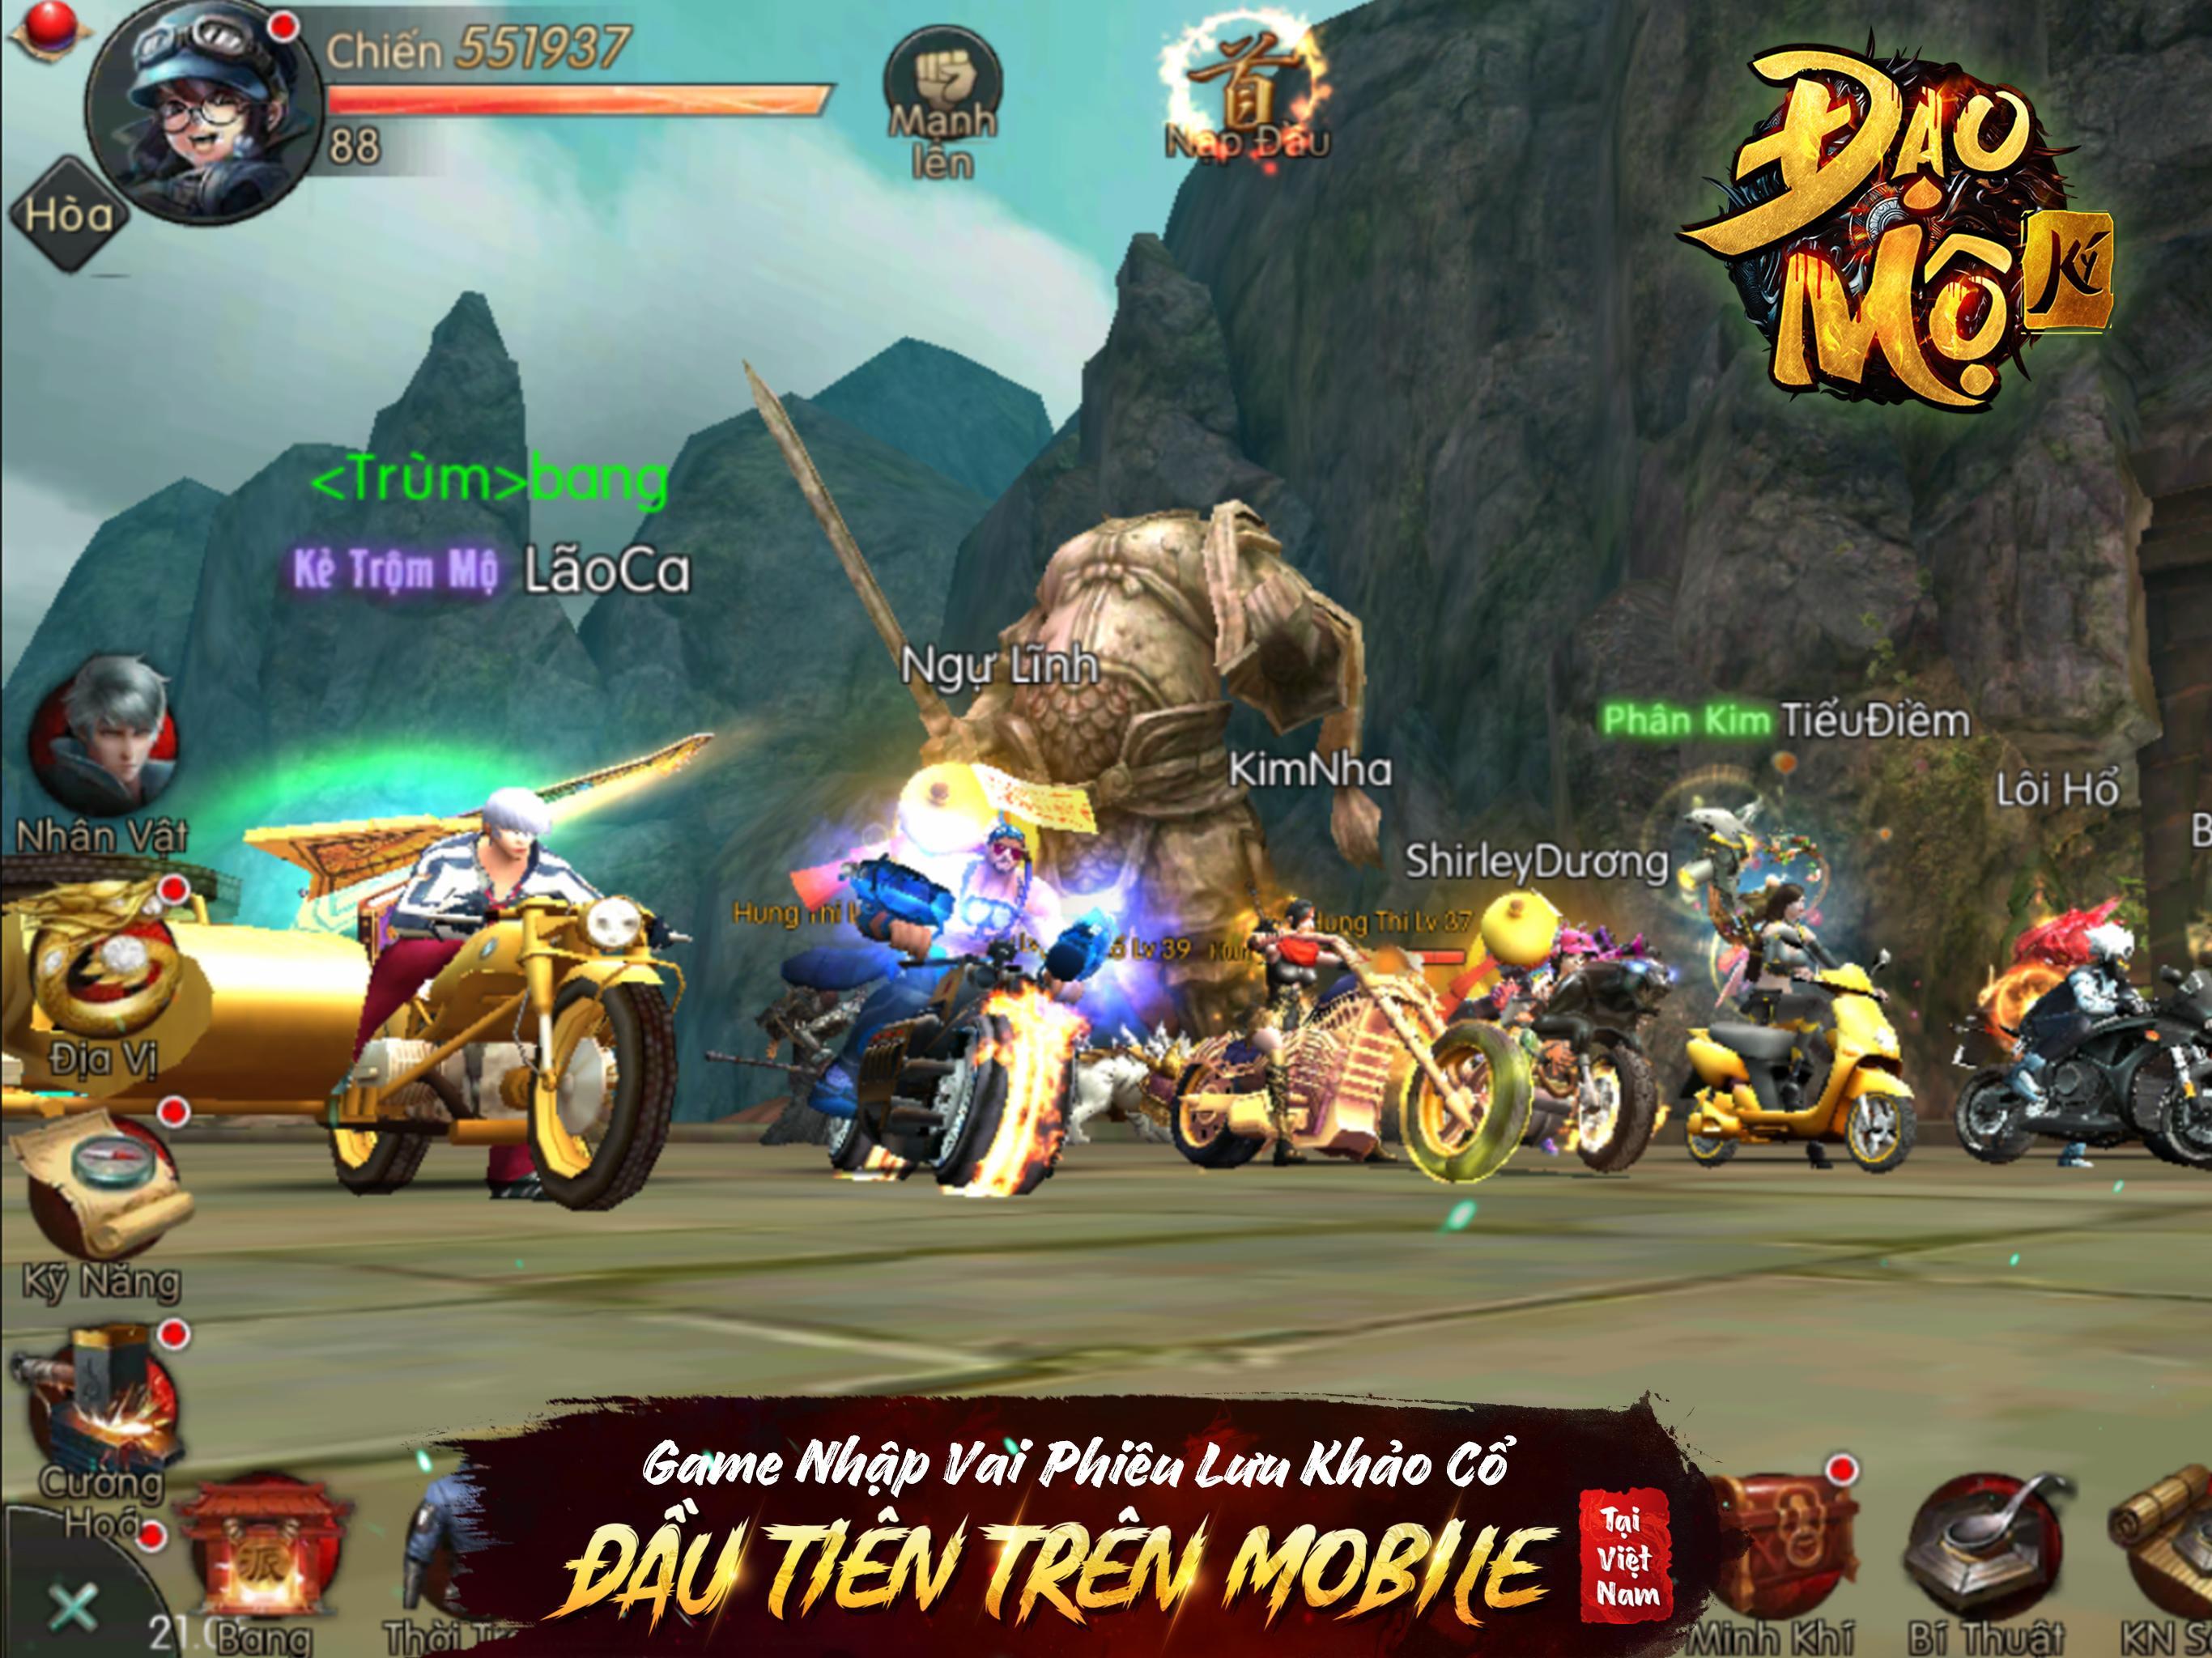 Screenshot 1 of Dao Mo Ky - Dao Mo Ky 